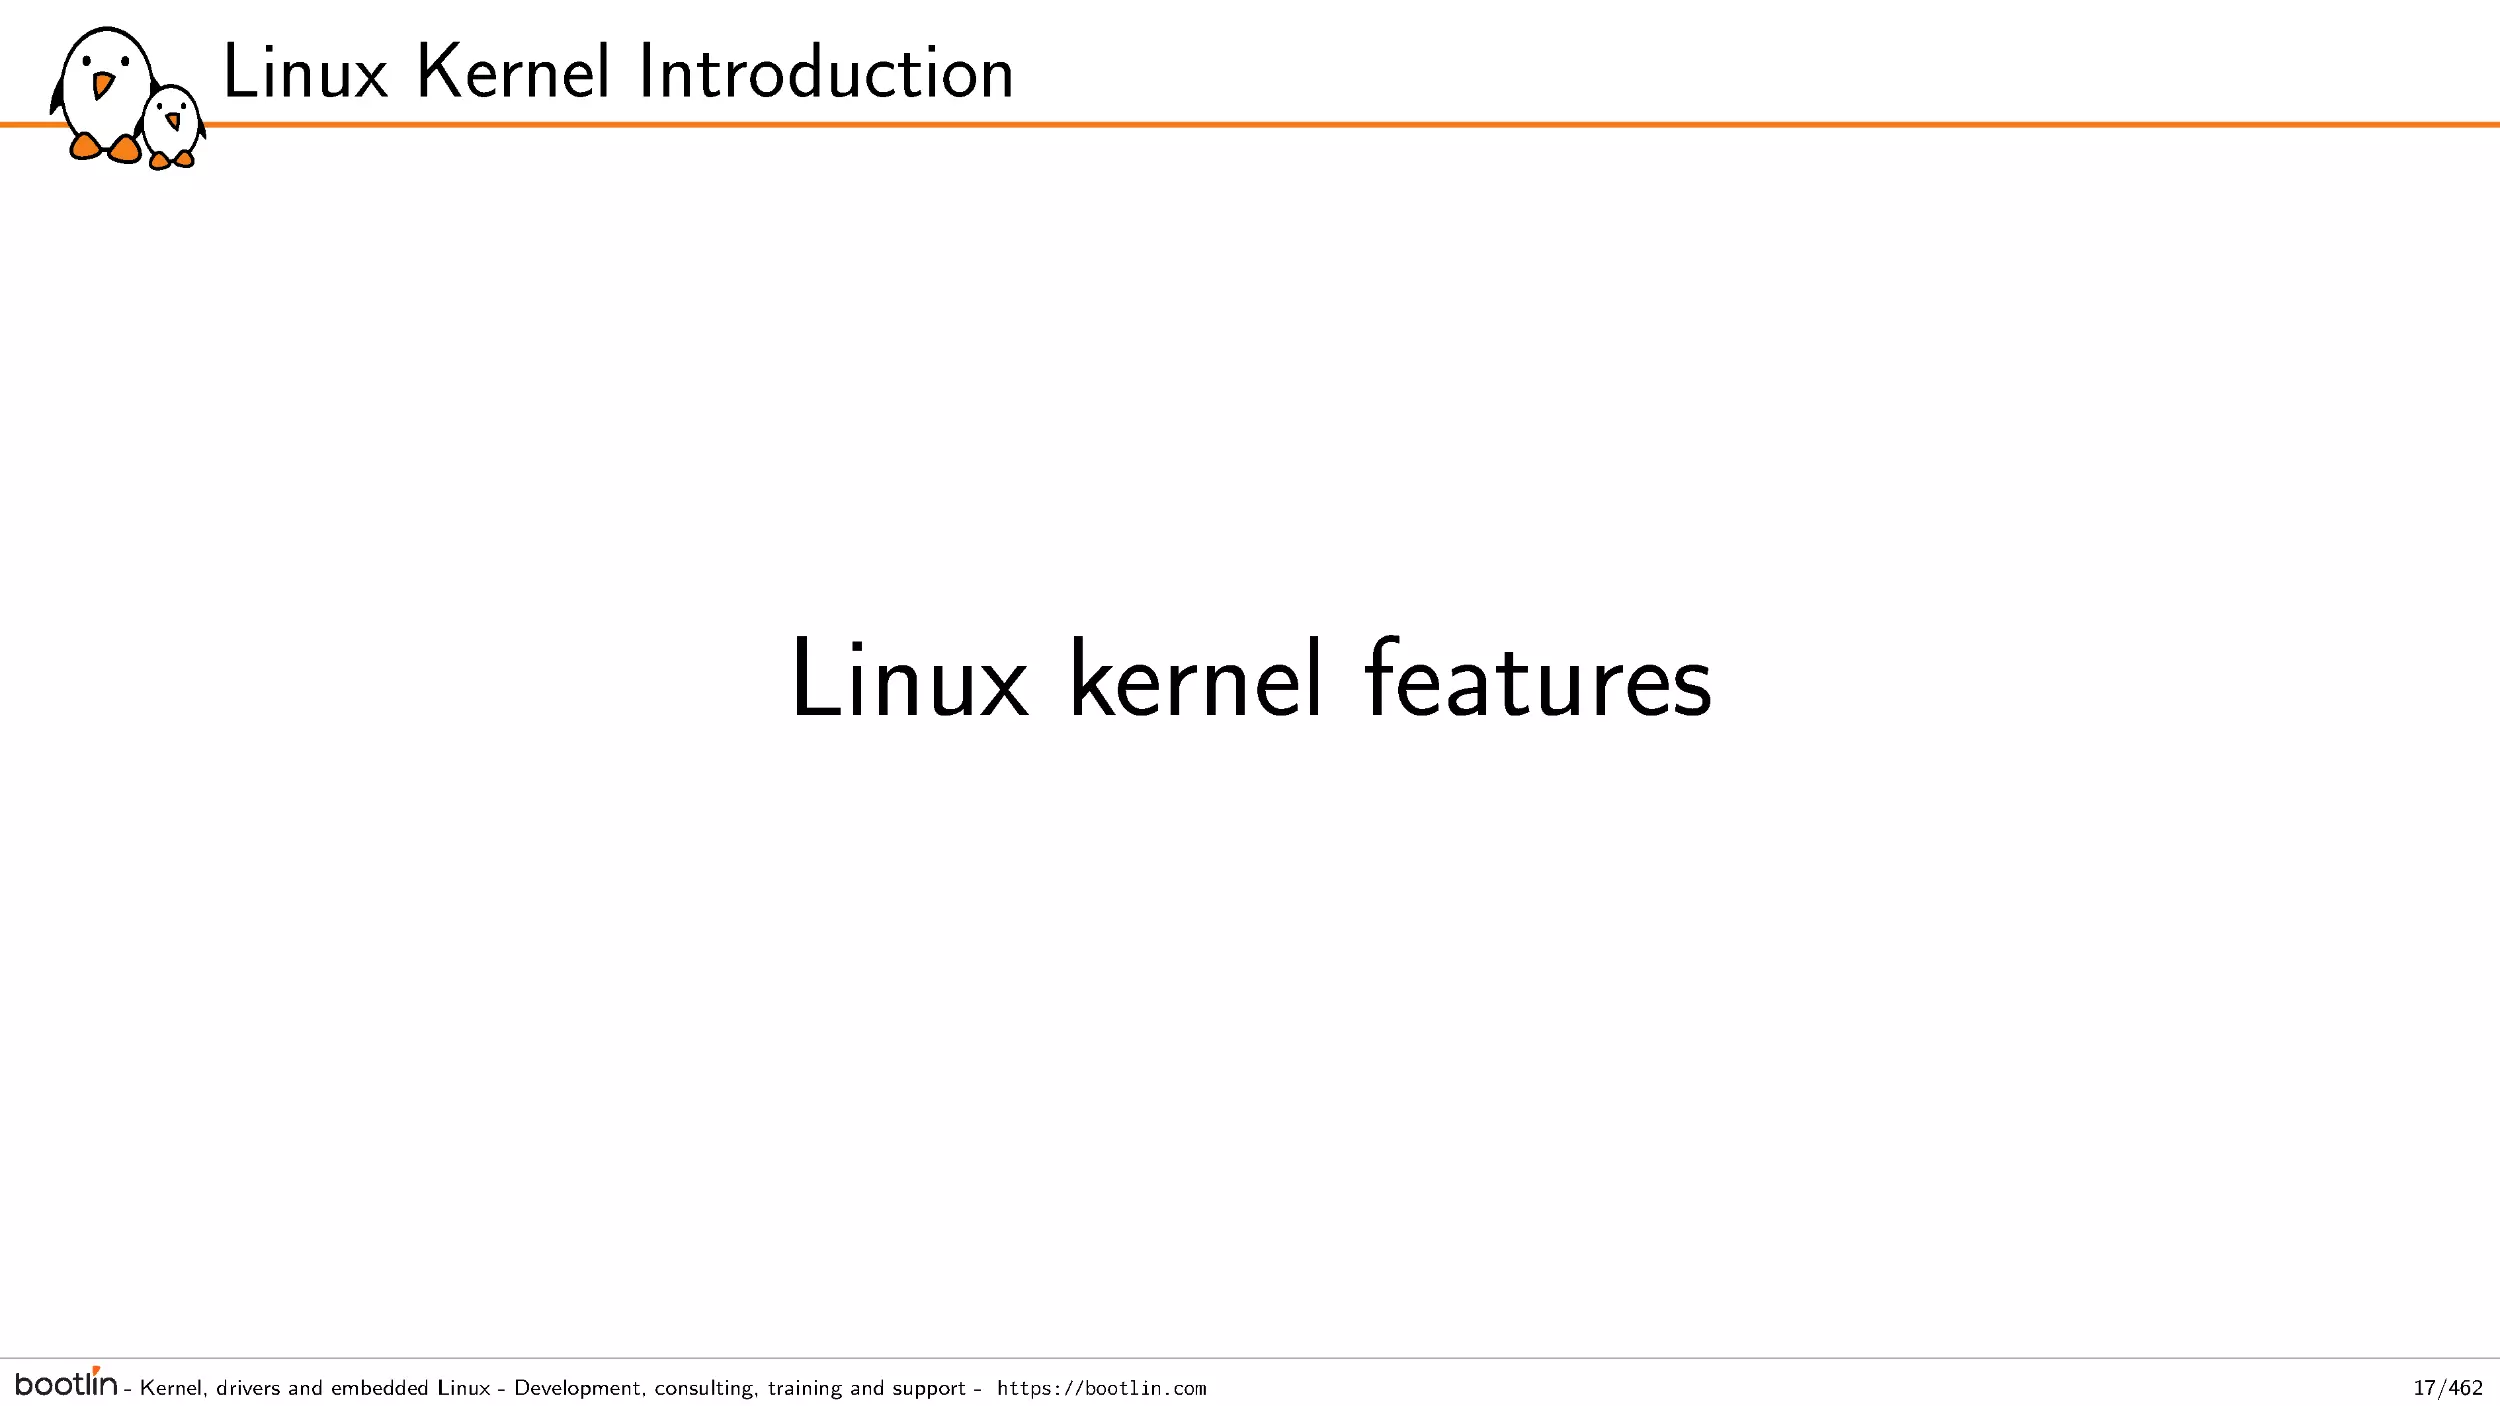 Linux kernel features